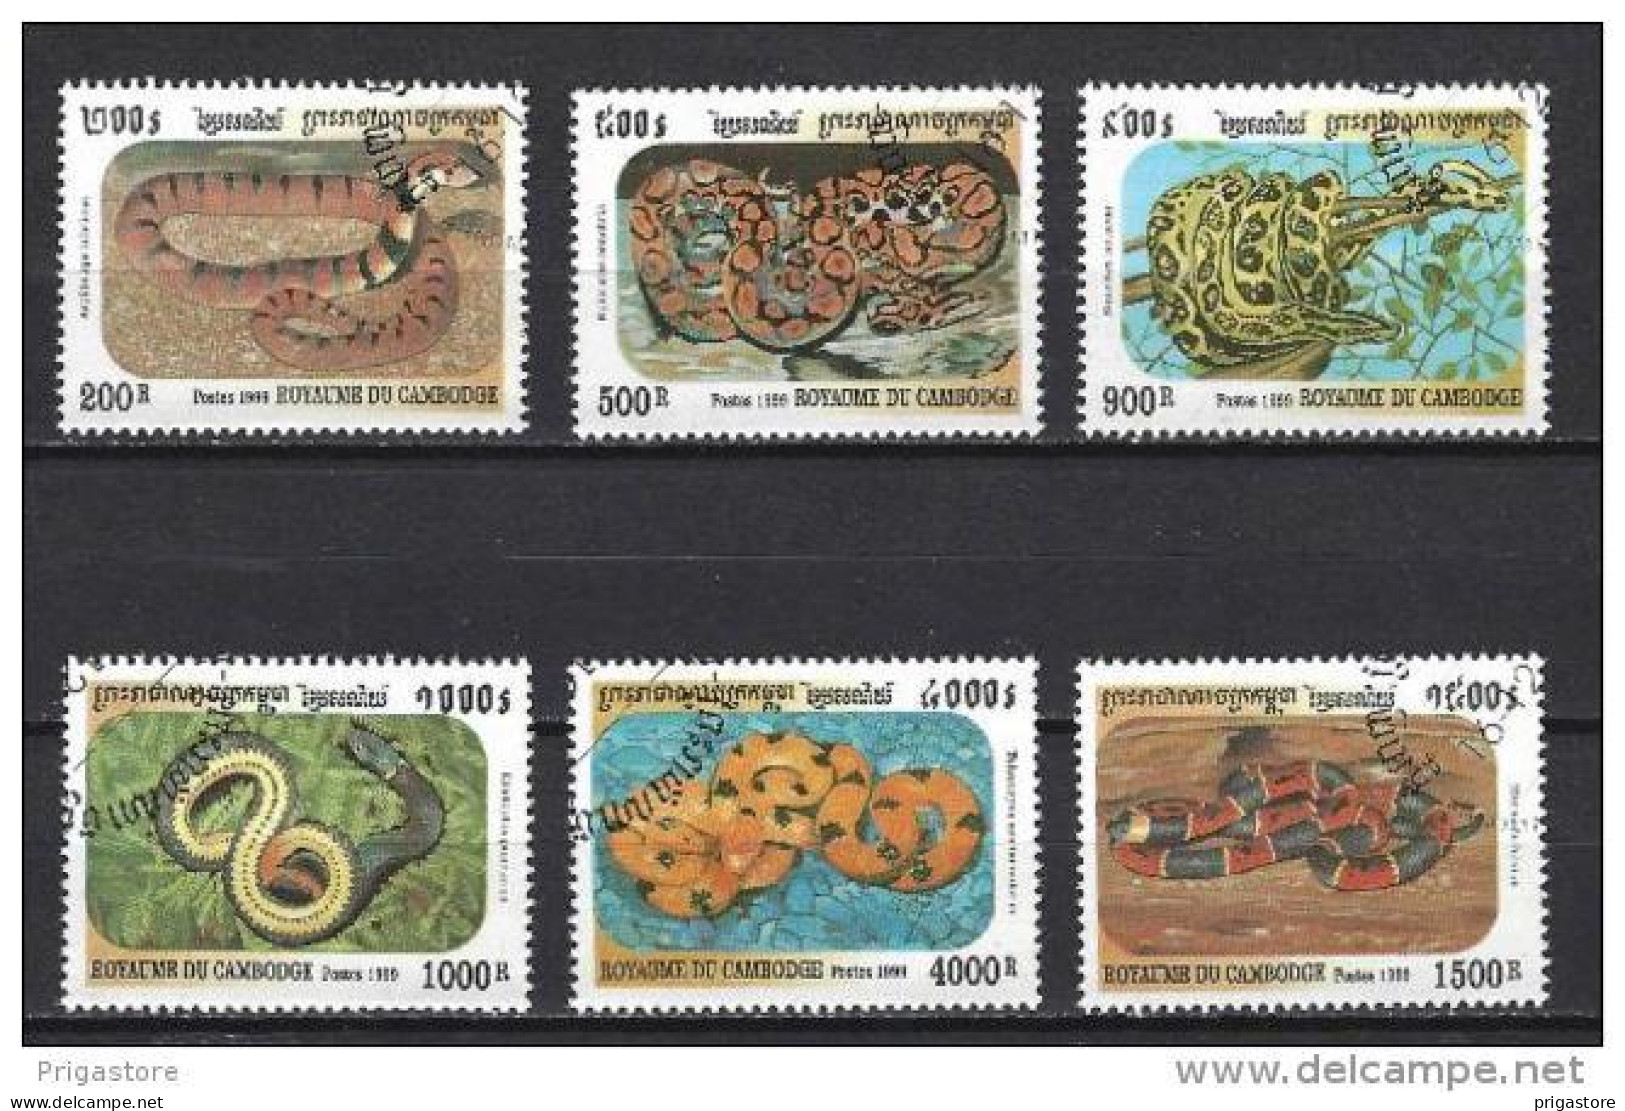 Animaux Serpents Cambodge 1999 (133) Yvert N° 1683 à 1688 Oblitérés Used - Serpientes